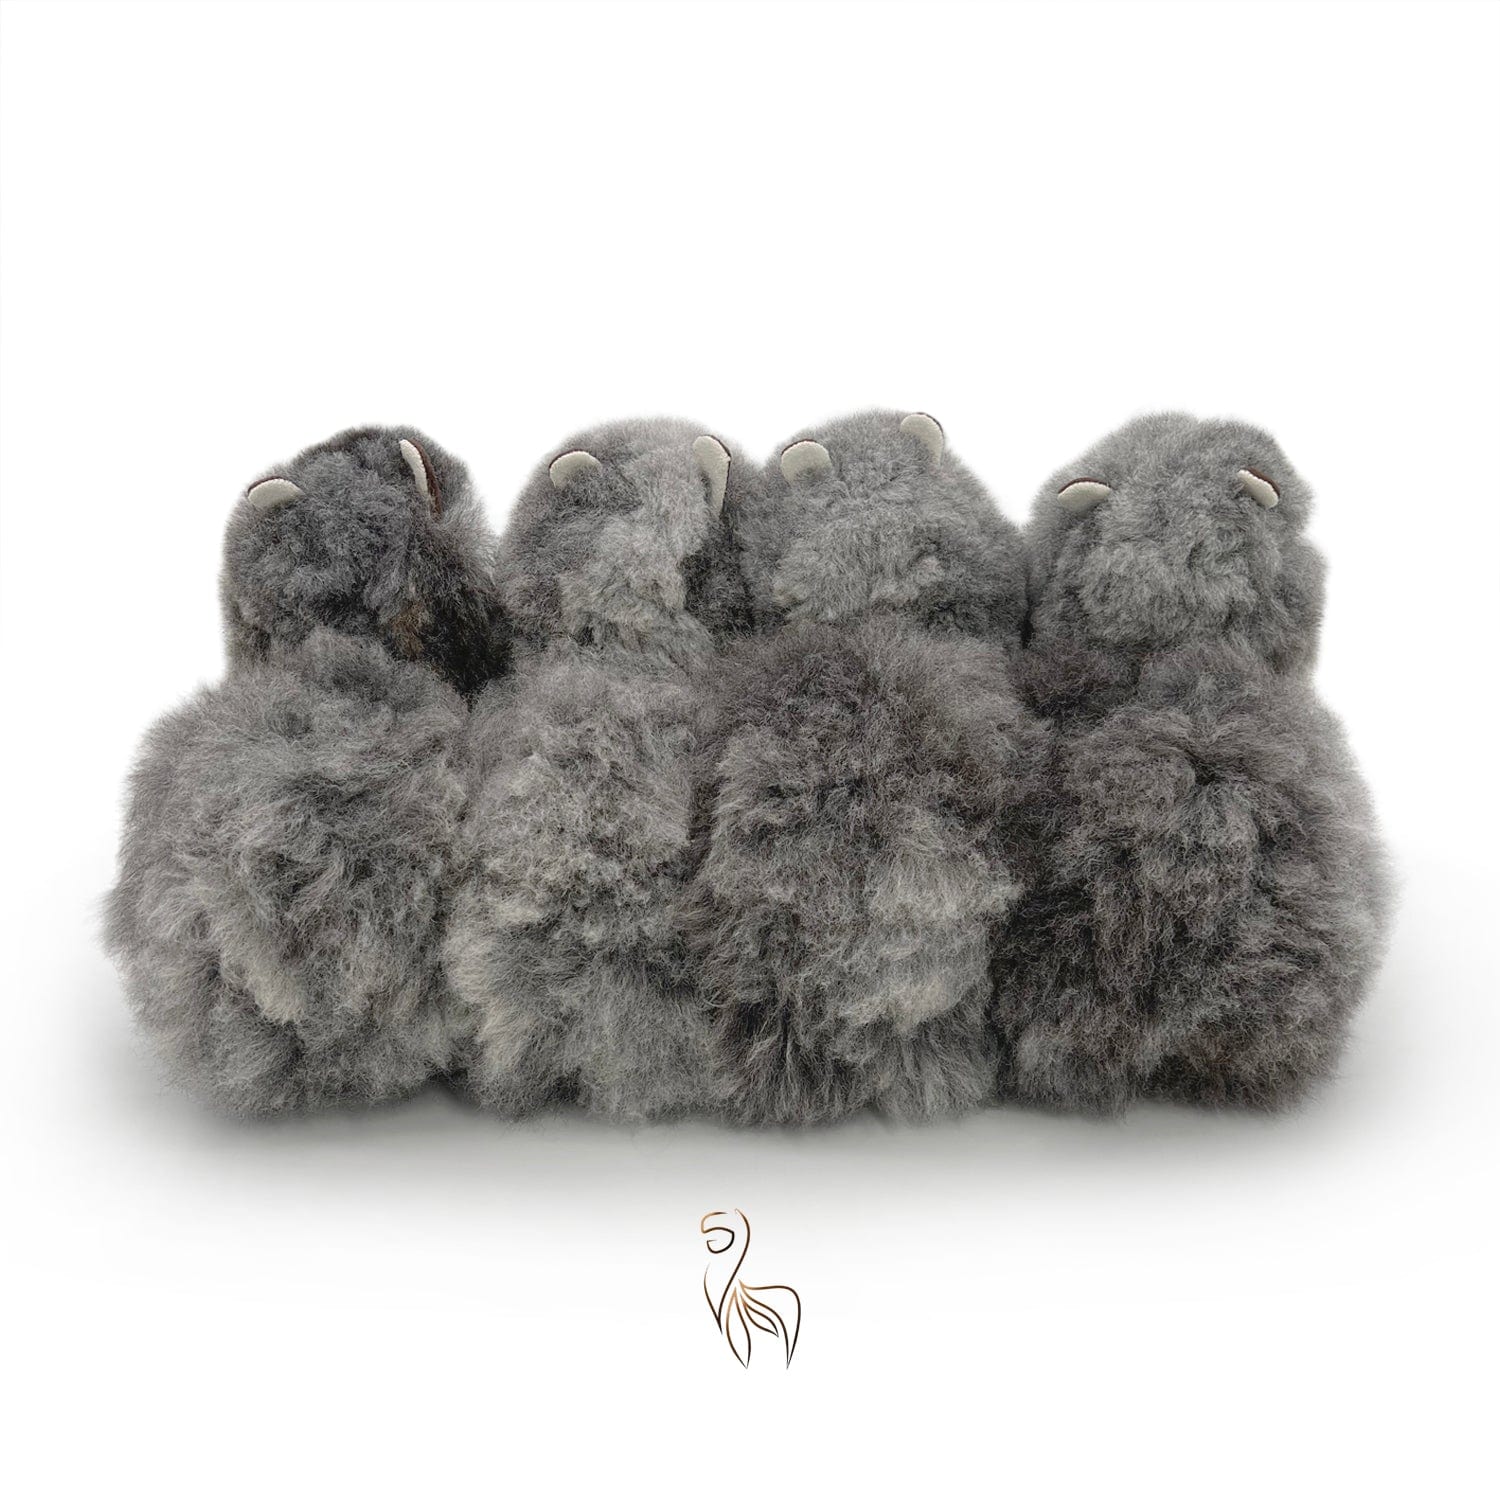 Wolf - Small Alpaca Toy (23cm) - Limited Edition